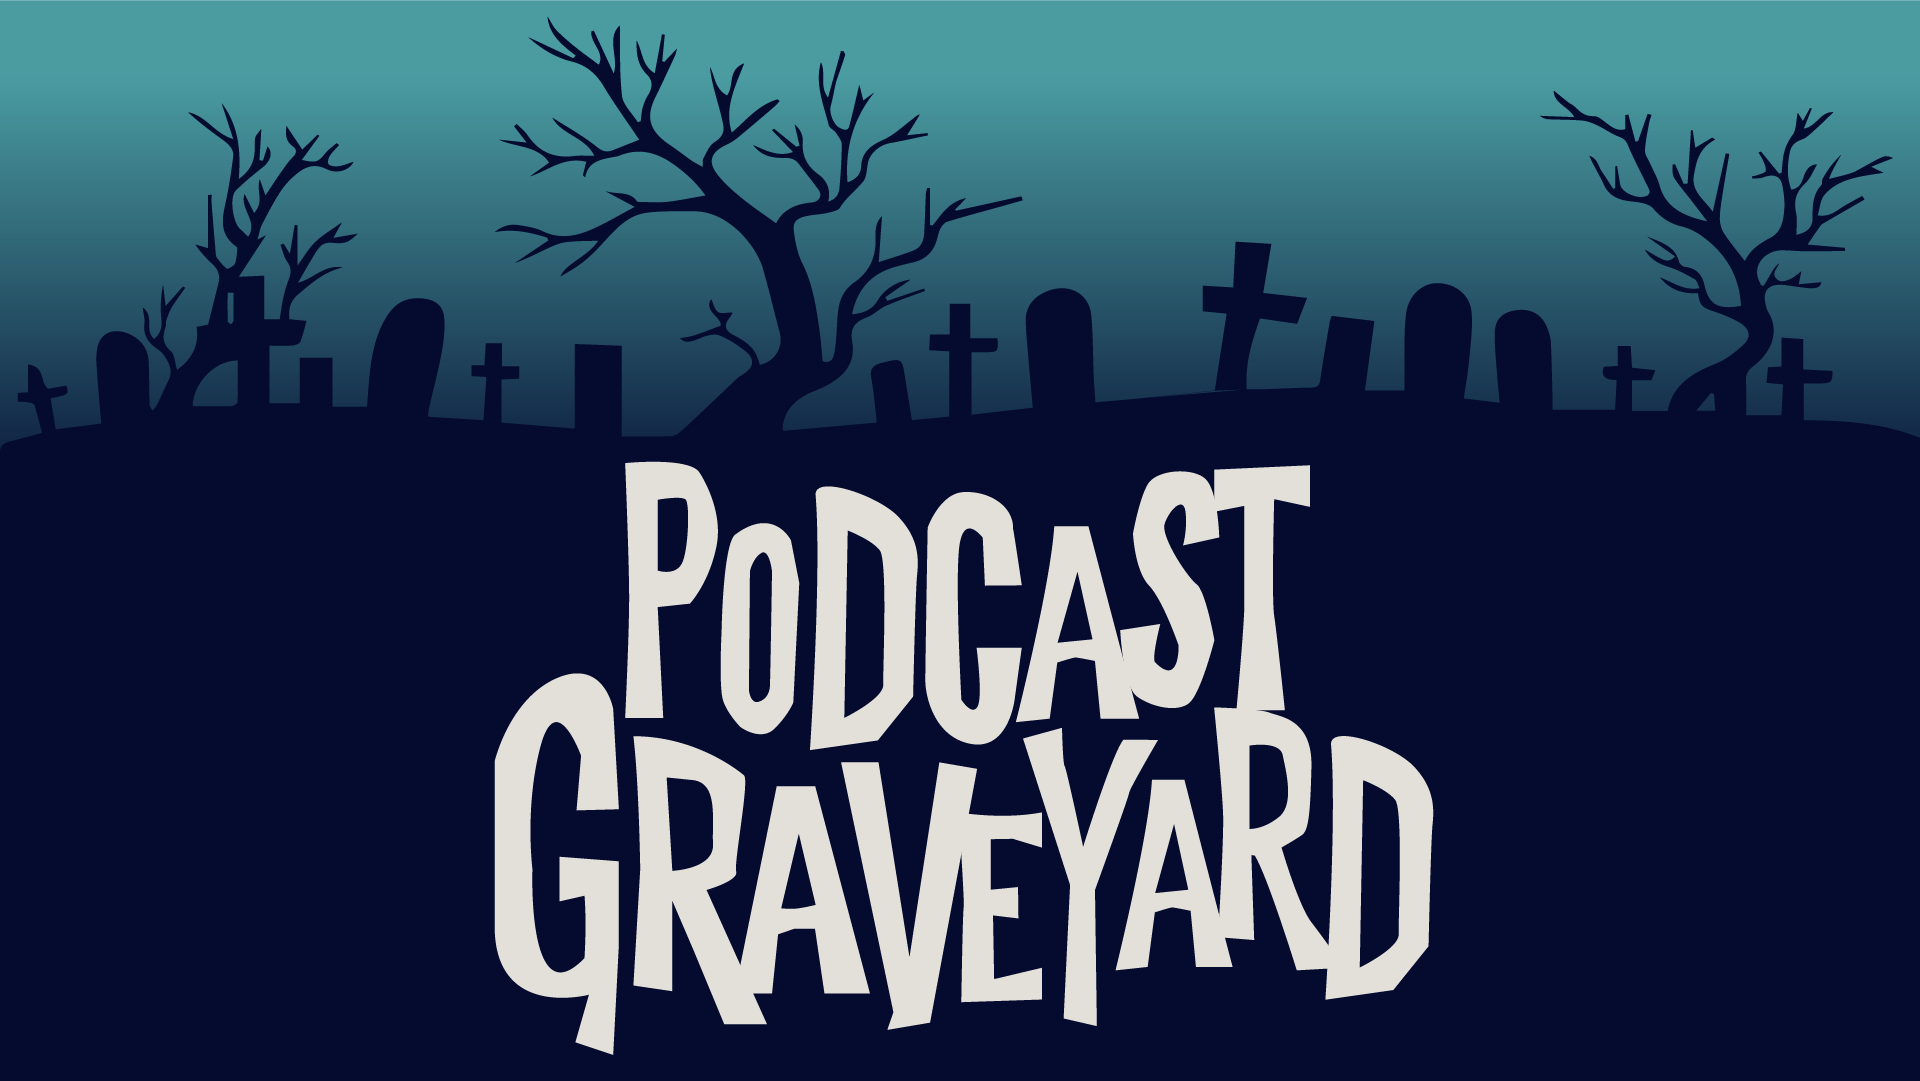 Podcast Graveyard